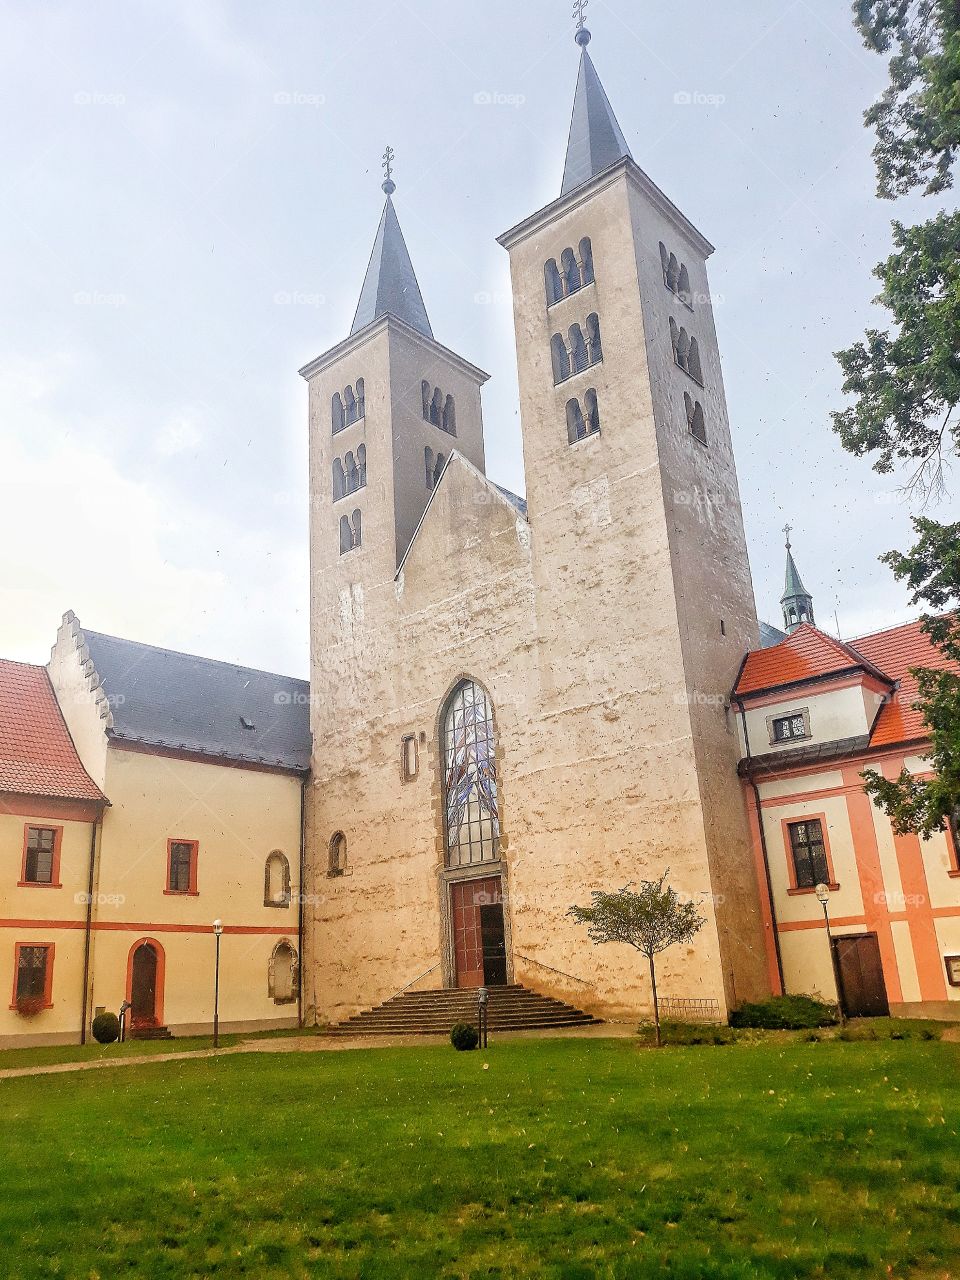 Premonstratensian monastery in the Czech town of Milevsko.